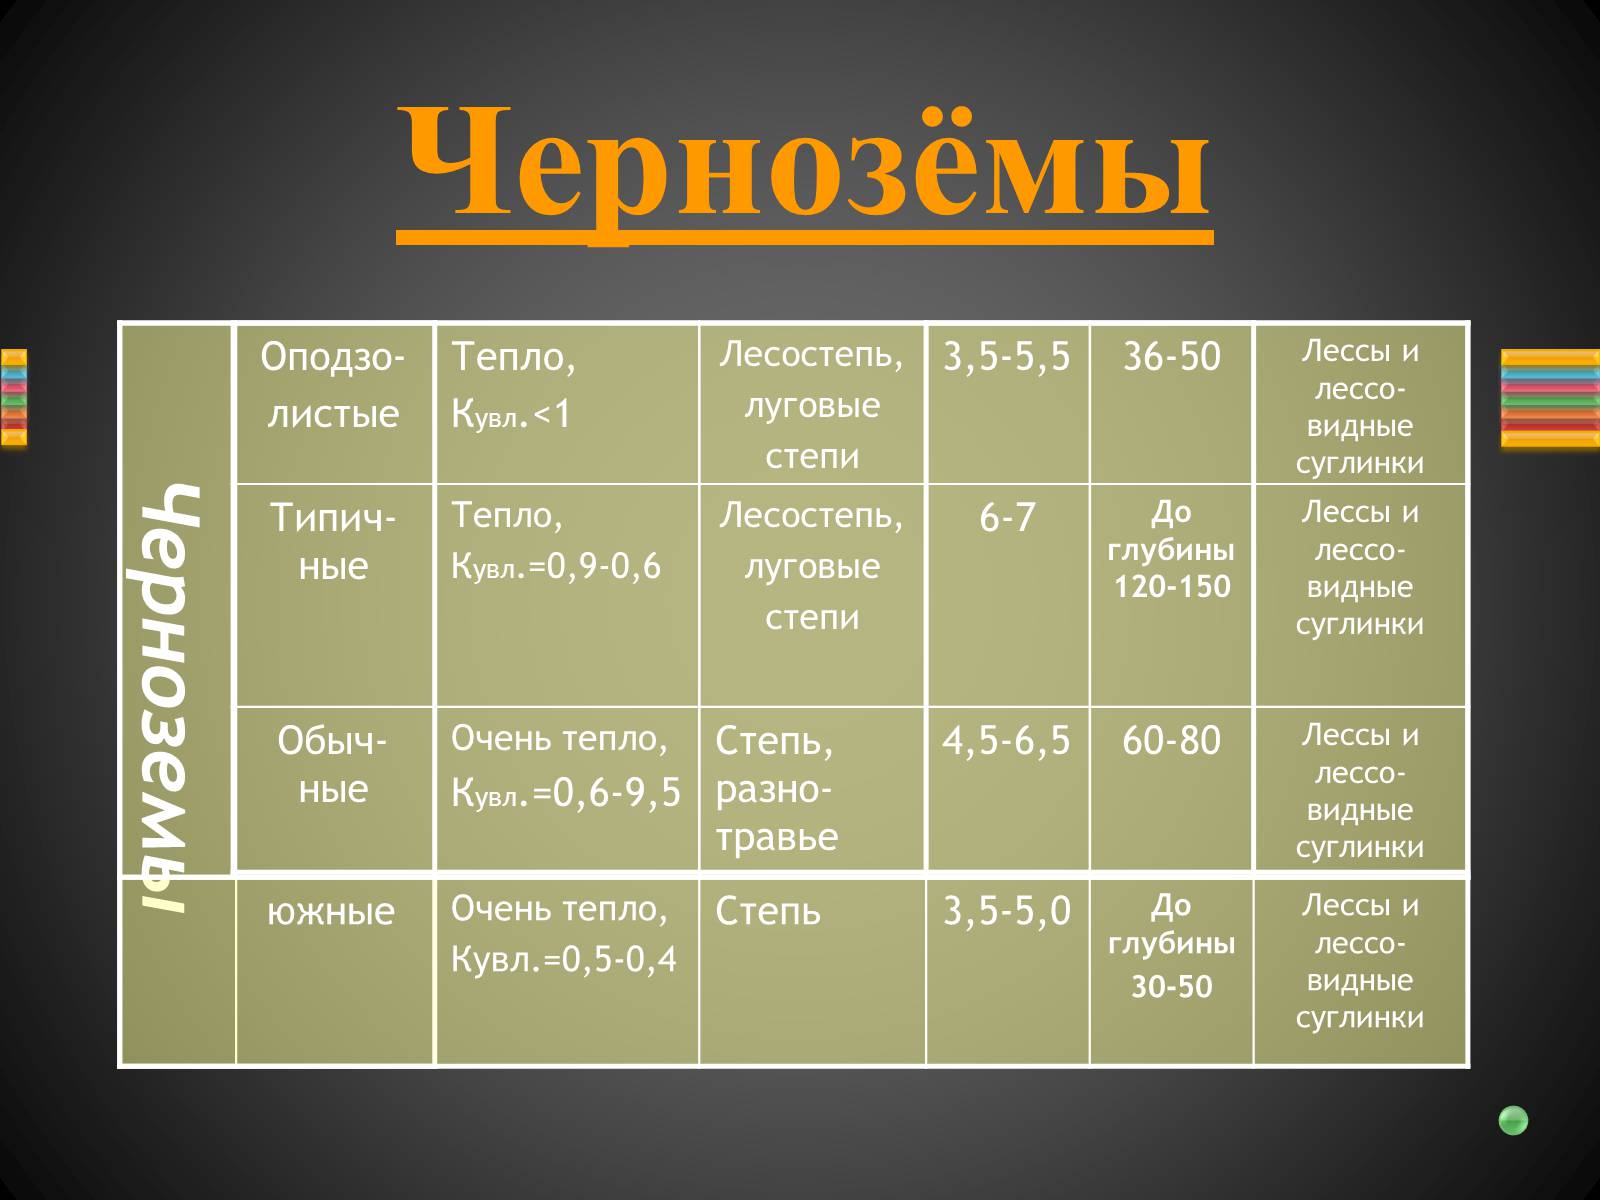 Презентація на тему «Почвы Украины» - Слайд #20